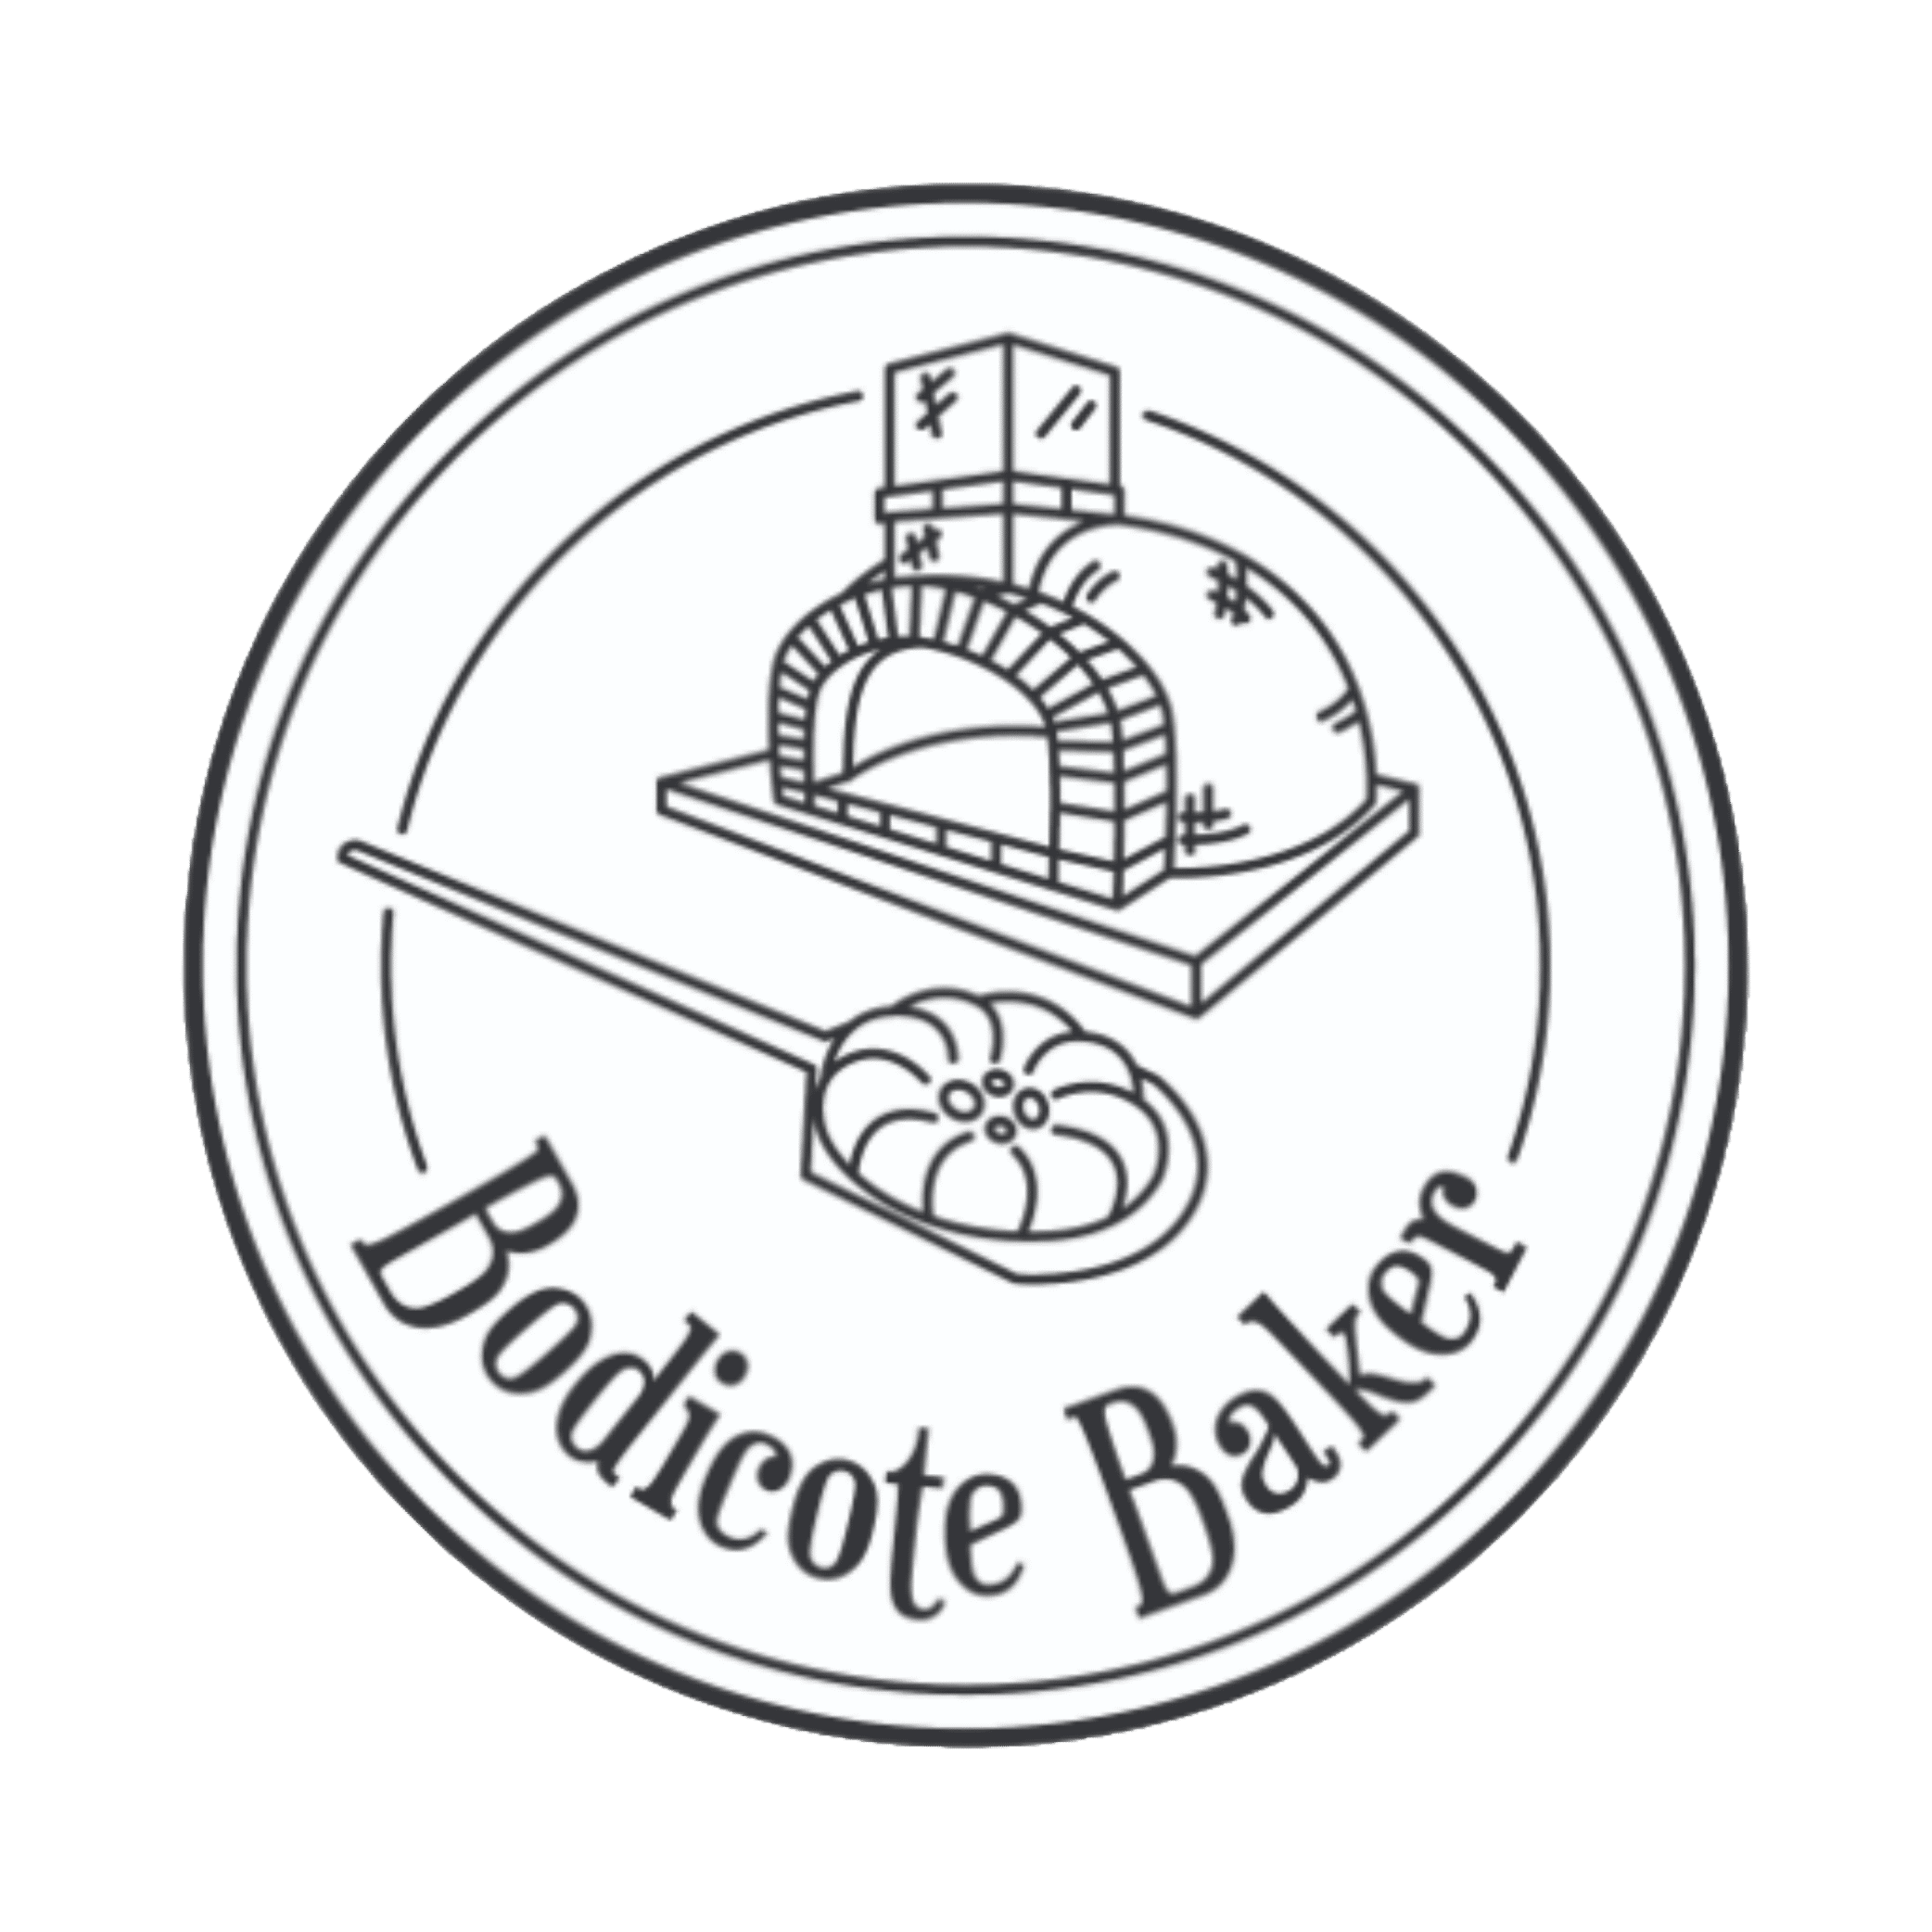 latest – The Bodicote Baker